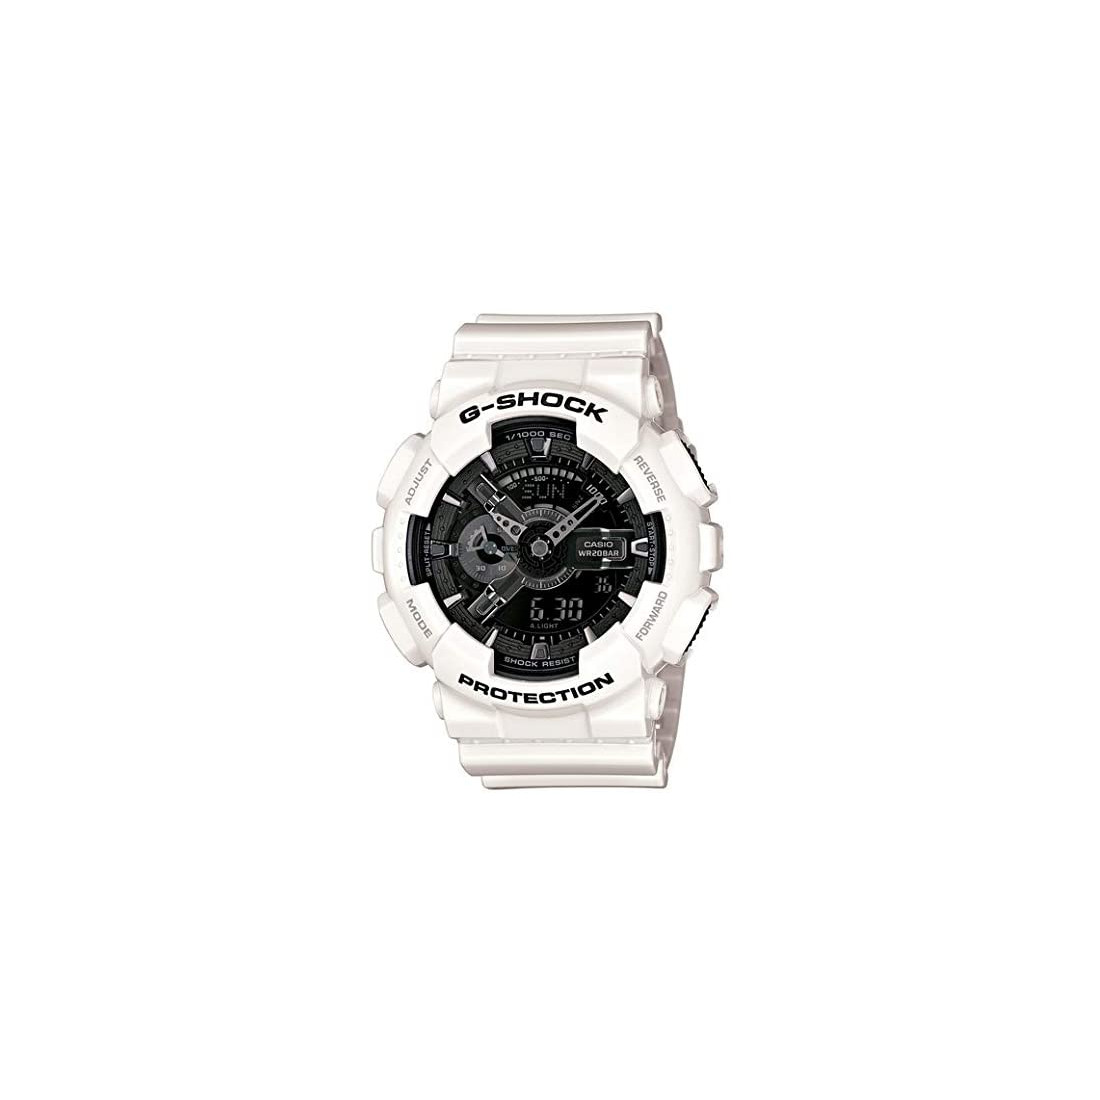 Digital縲�G-Shock縲�Dial縲�GA-110GW-7ADR縲�Resin縲�S...縲�Casio縲�Analog縲�Black縲�White